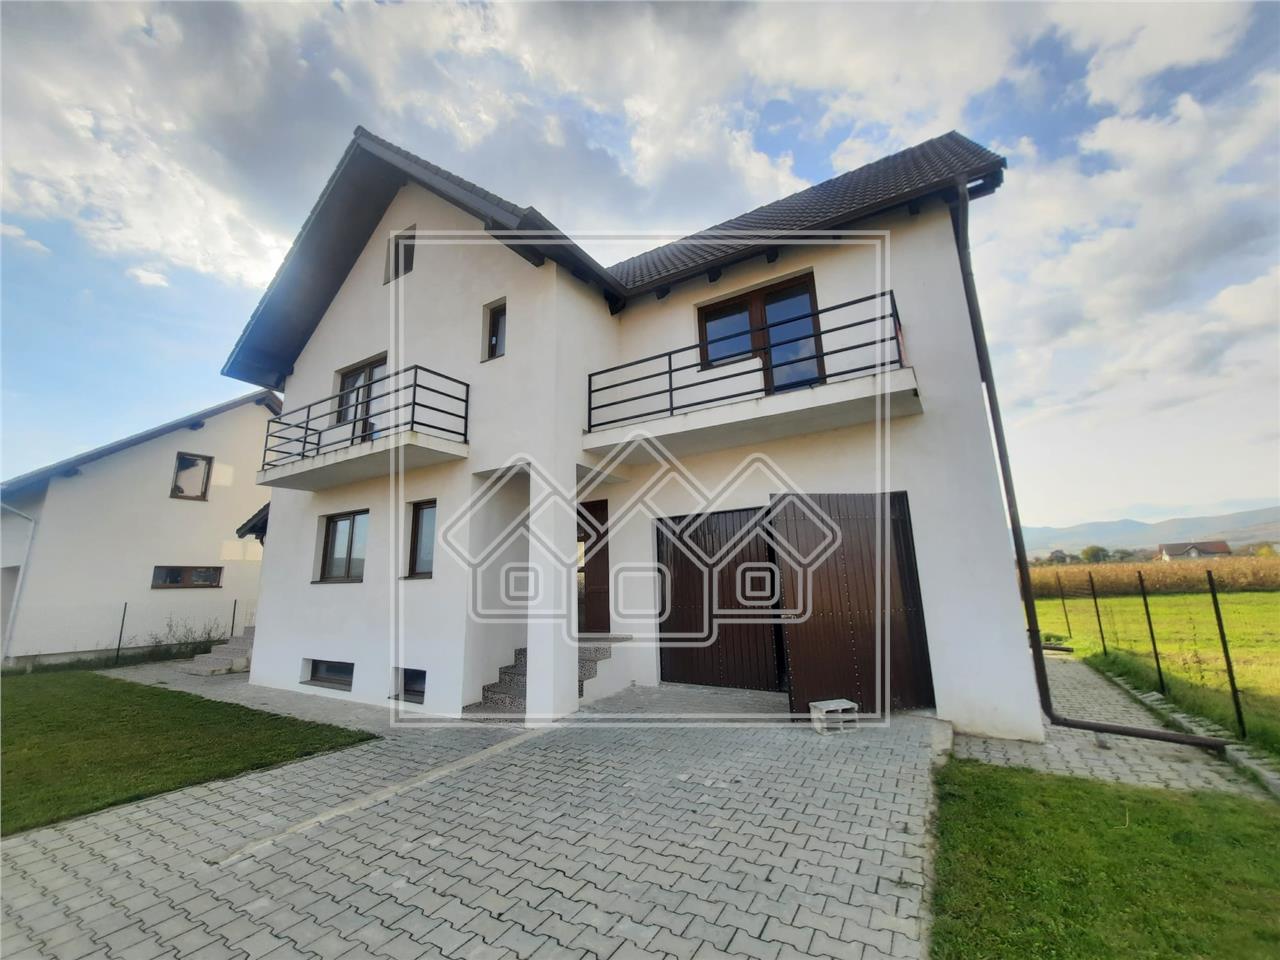 Detached house for sale - Alba Iulia - Partos area